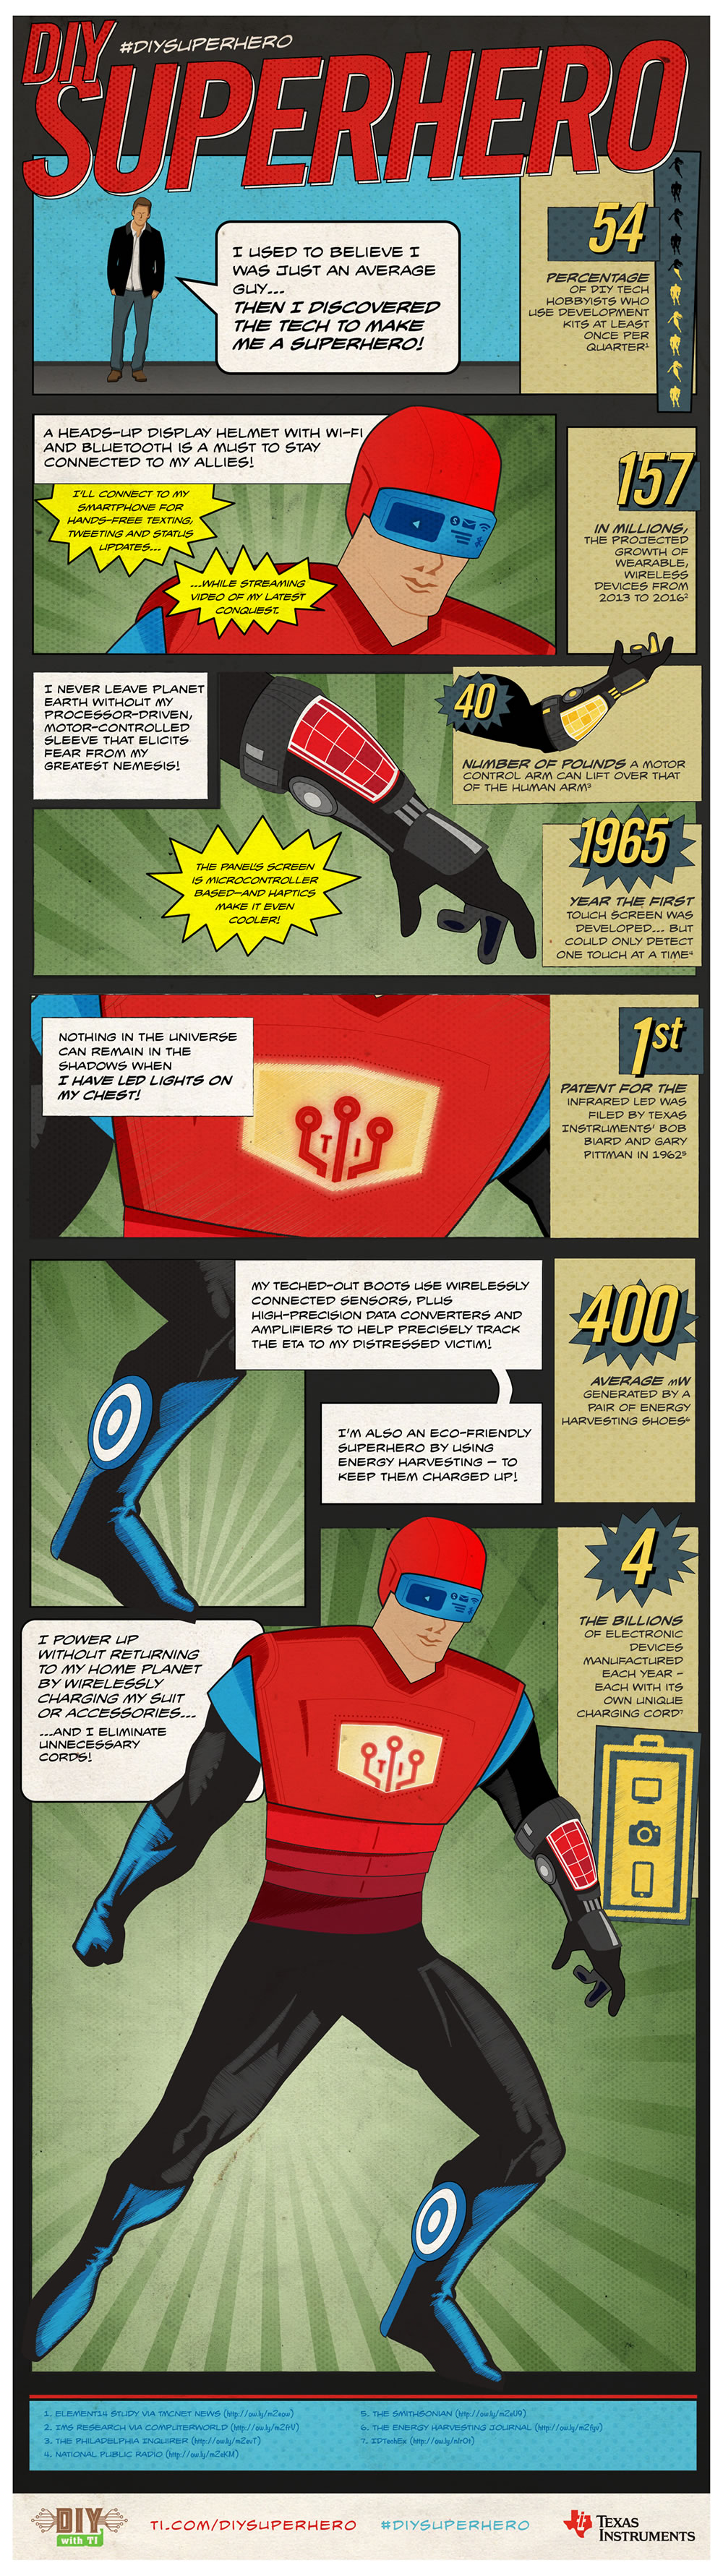 DIY Superhero: How Today’s Tech Creates Superheroes [Infographic]